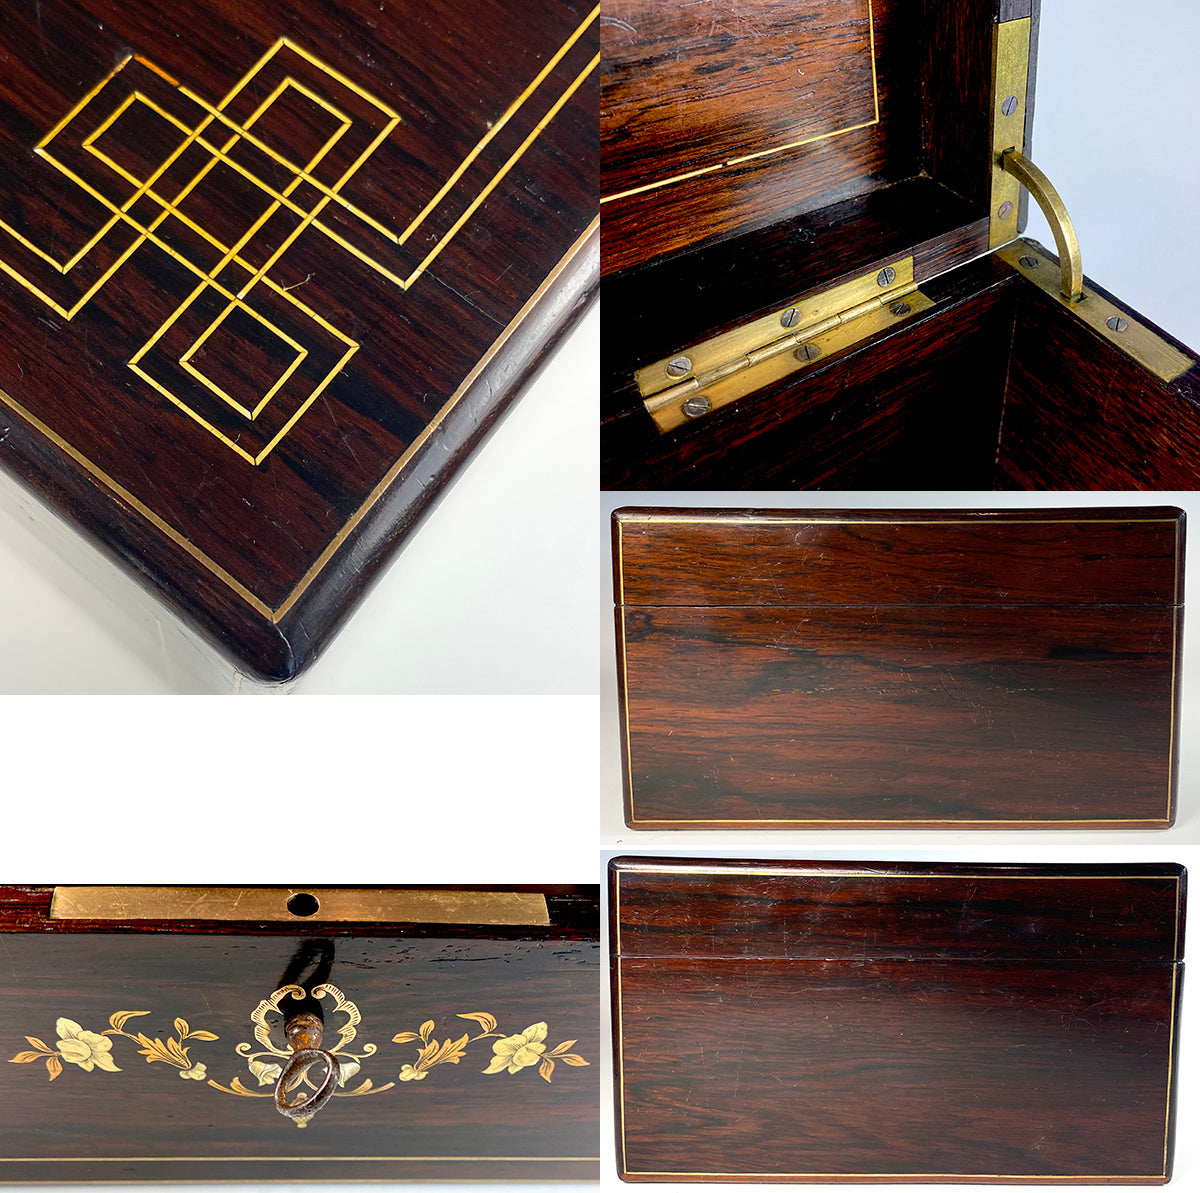 Antique French 11 3/4" x 8" Table Box w Boulle Inlays, Napoleon III Victorian Era, Lock & Key